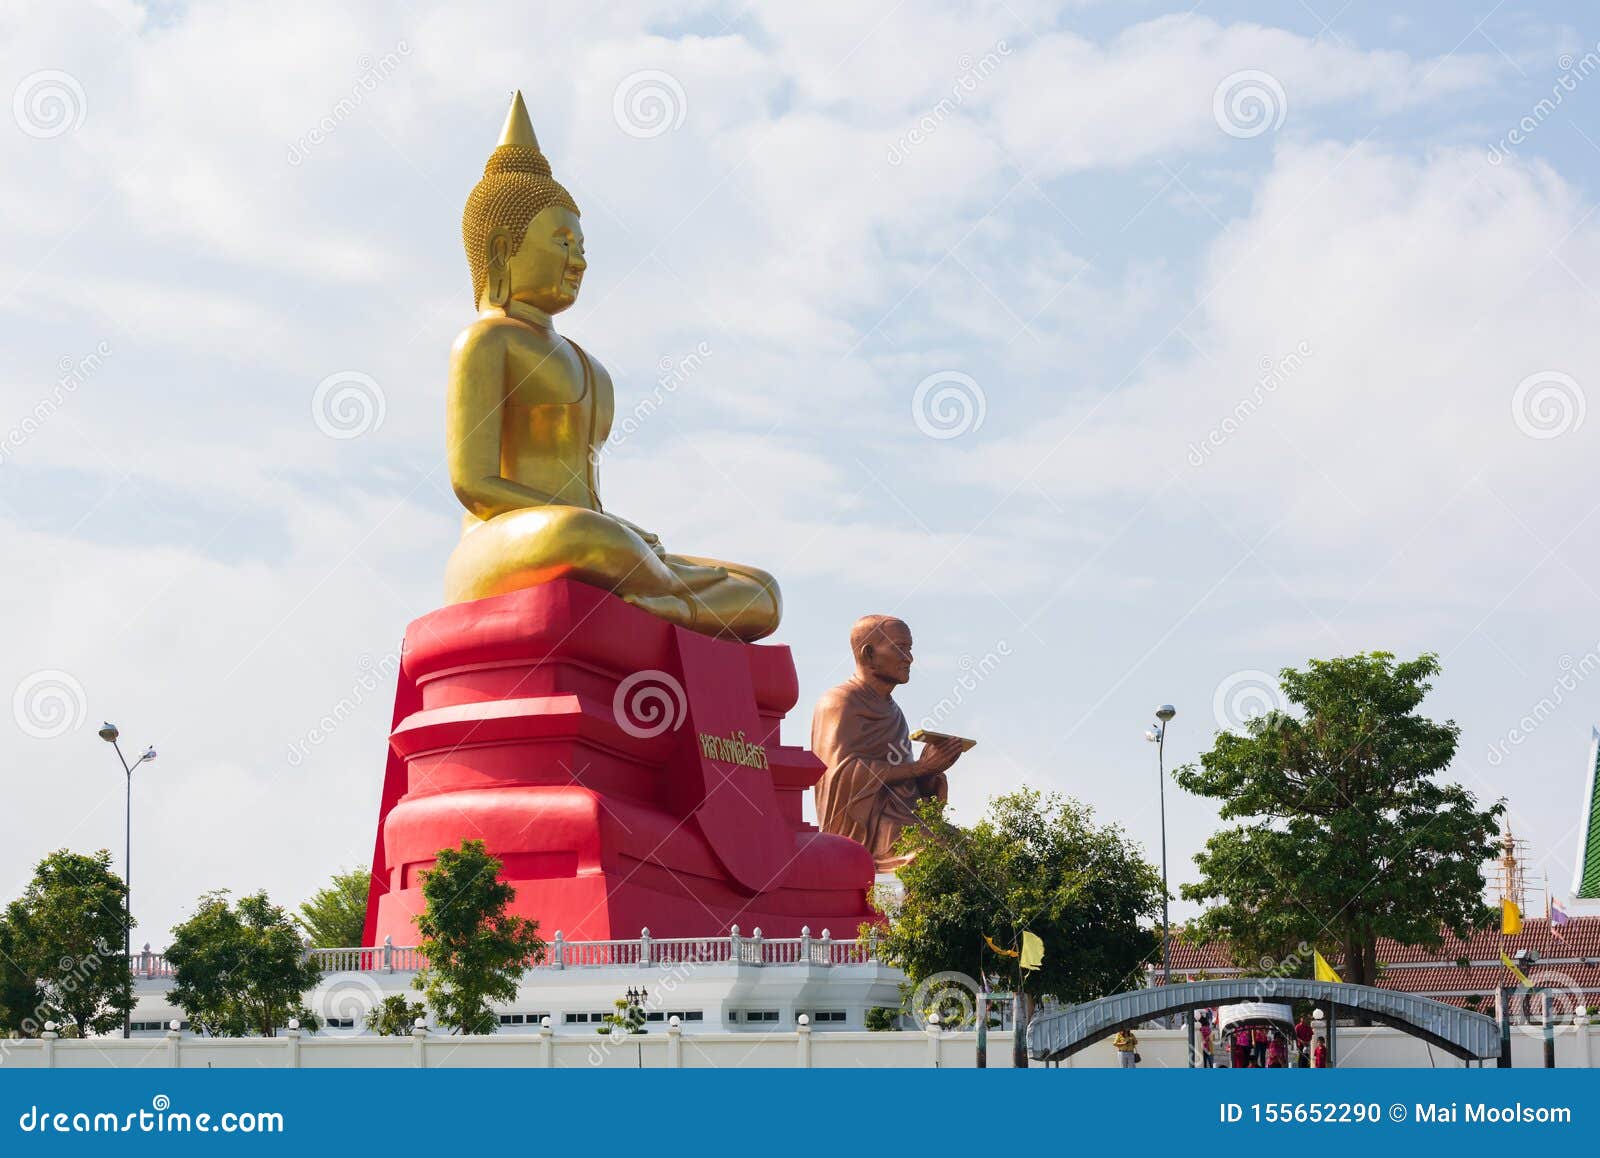 Bangkok, Thailand Jan 20, 2016 Temple Of Buddhist